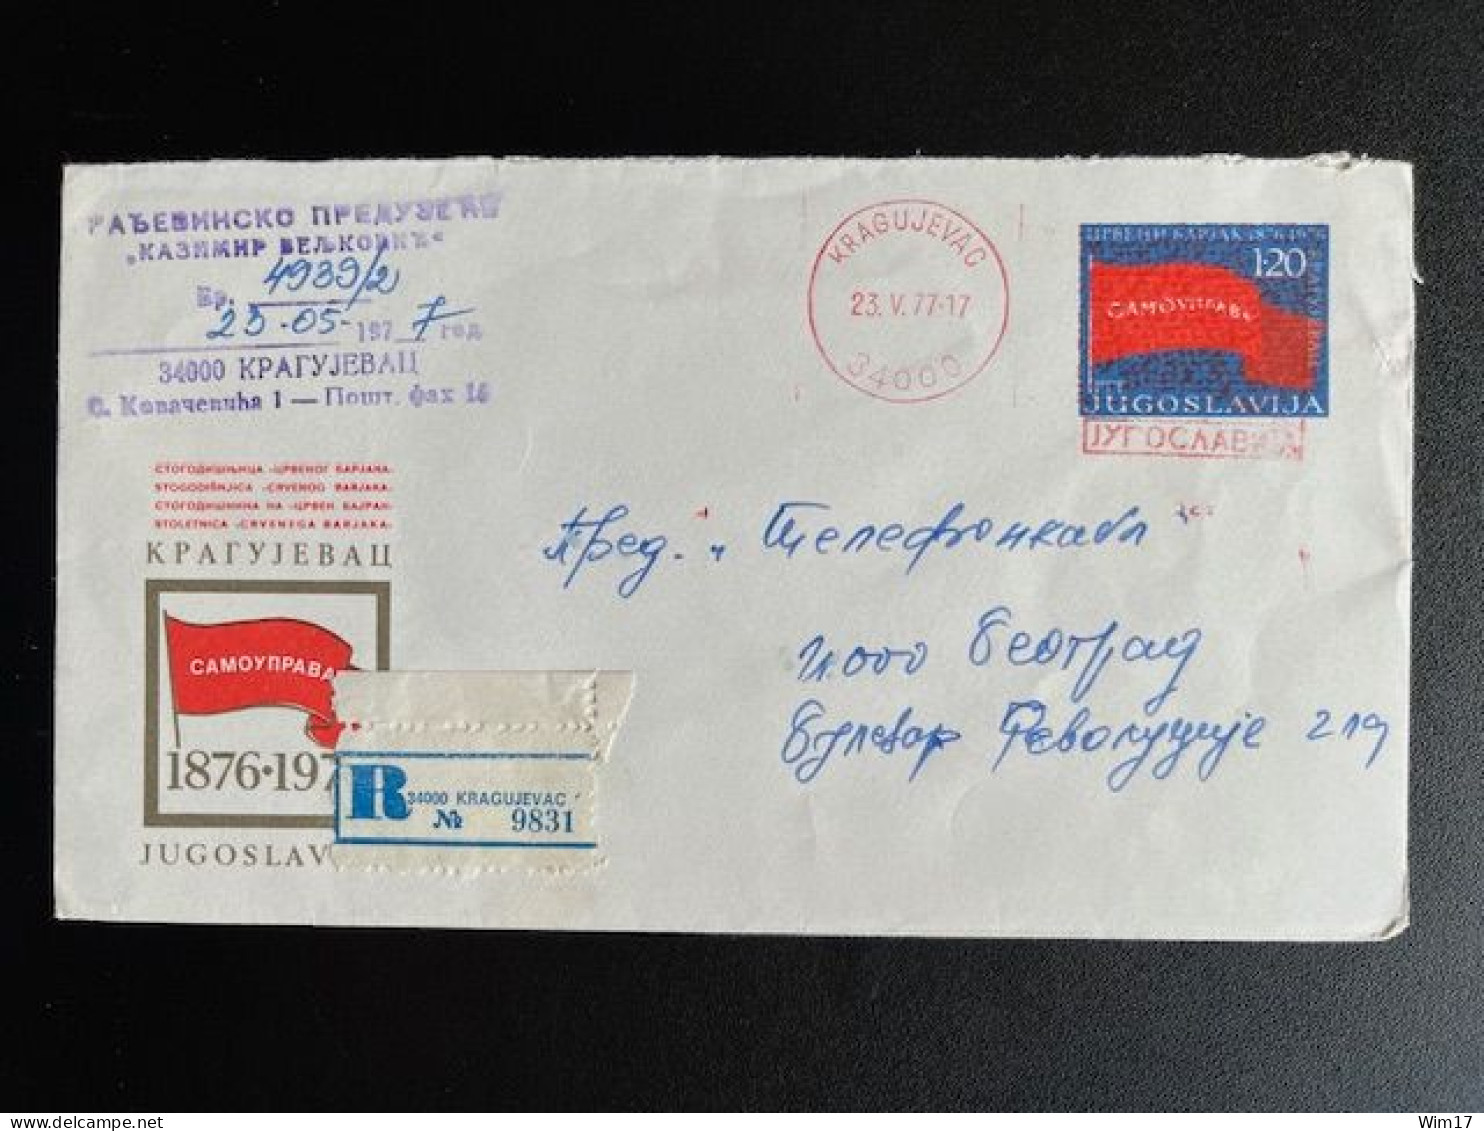 JUGOSLAVIJA YUGOSLAVIA 1977 REGISTERED LETTER KRAGUJEVAC TO BELGRADE BEOGRAD 23-05-1977 - Covers & Documents